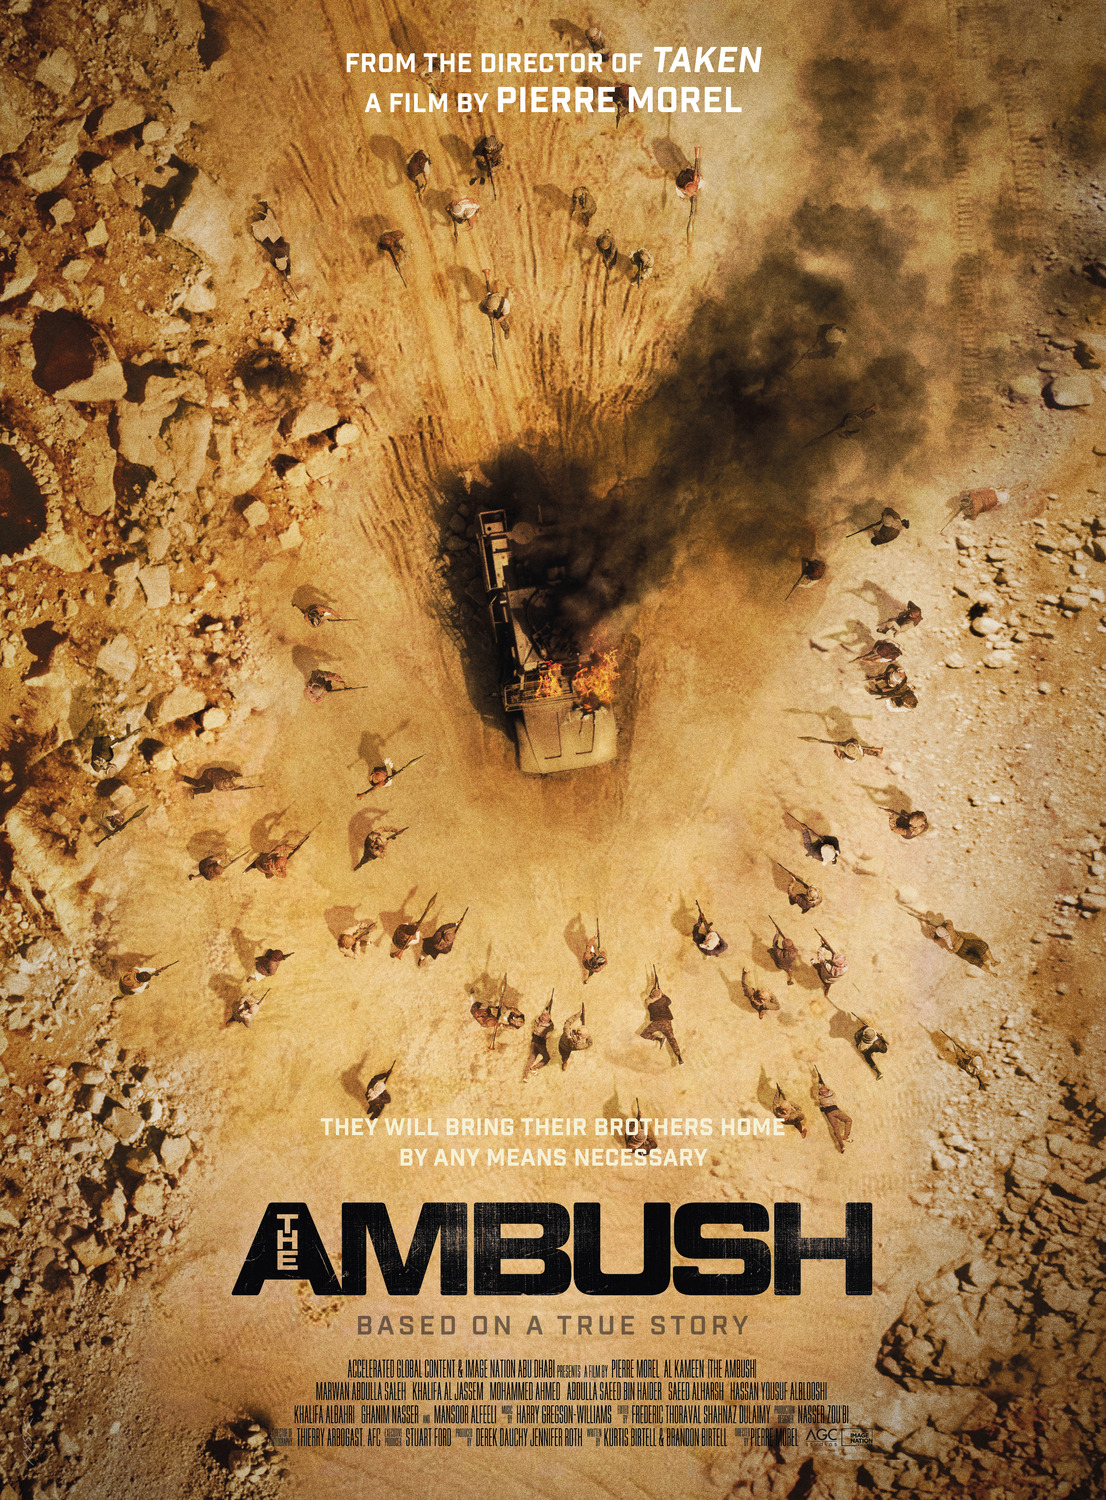 Extra Large Movie Poster Image for The Ambush 